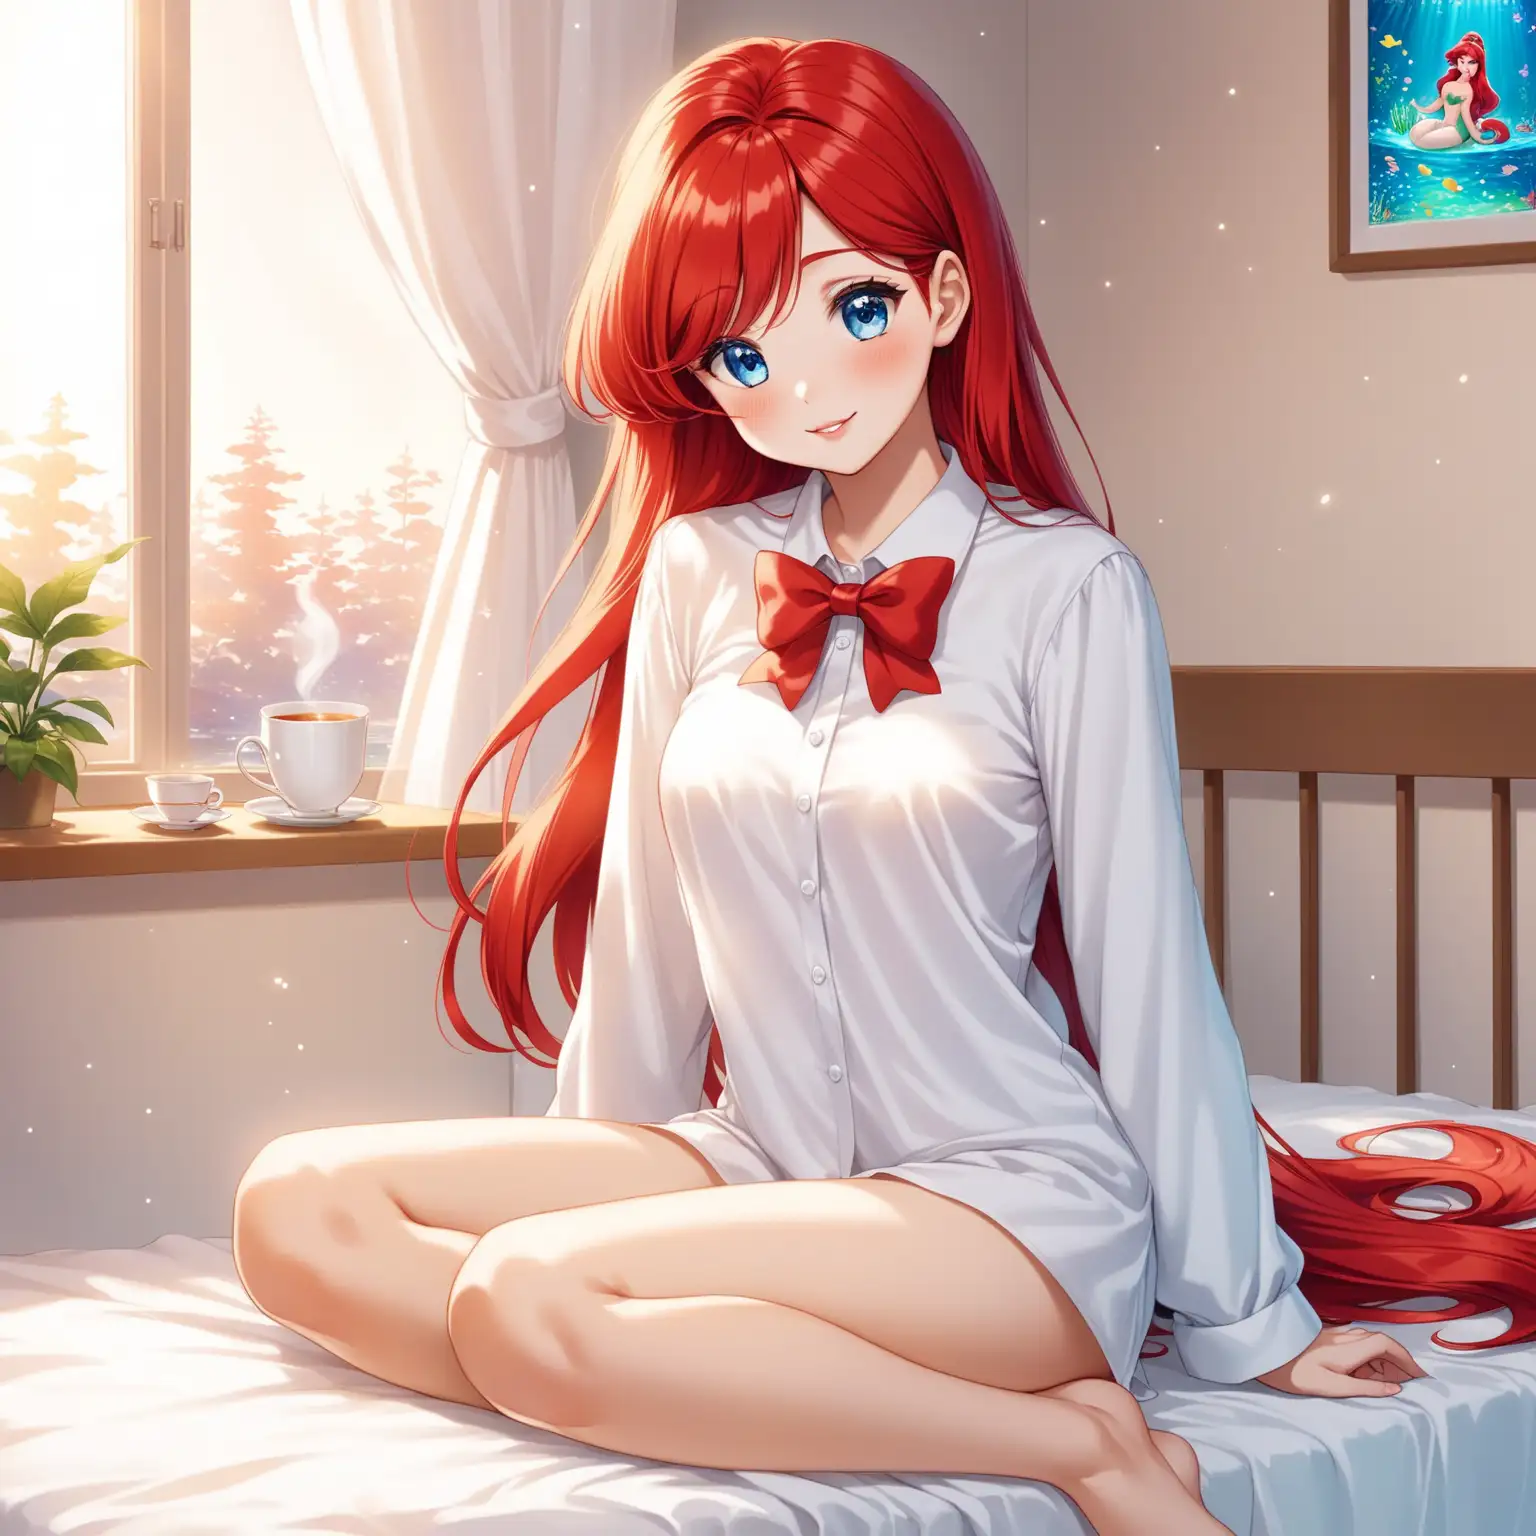 Dreamy Ariel Enjoying Tea in Elegant Schoolgirl Attire